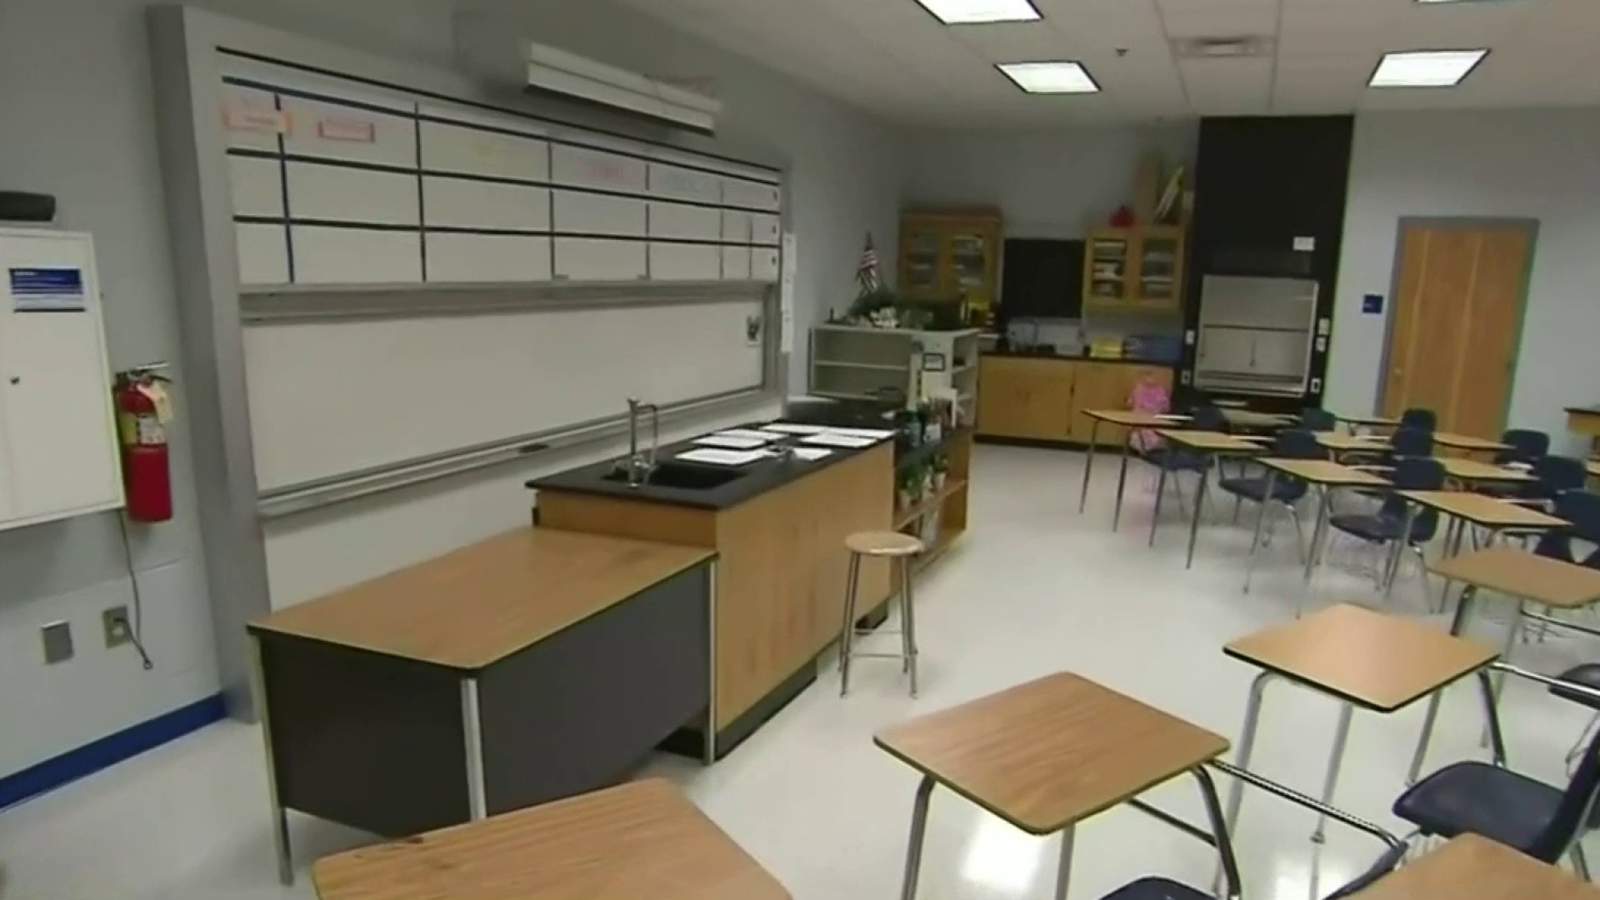 Detroit public schools say there aren’t enough teachers to meet the demand as schools reopen Monday